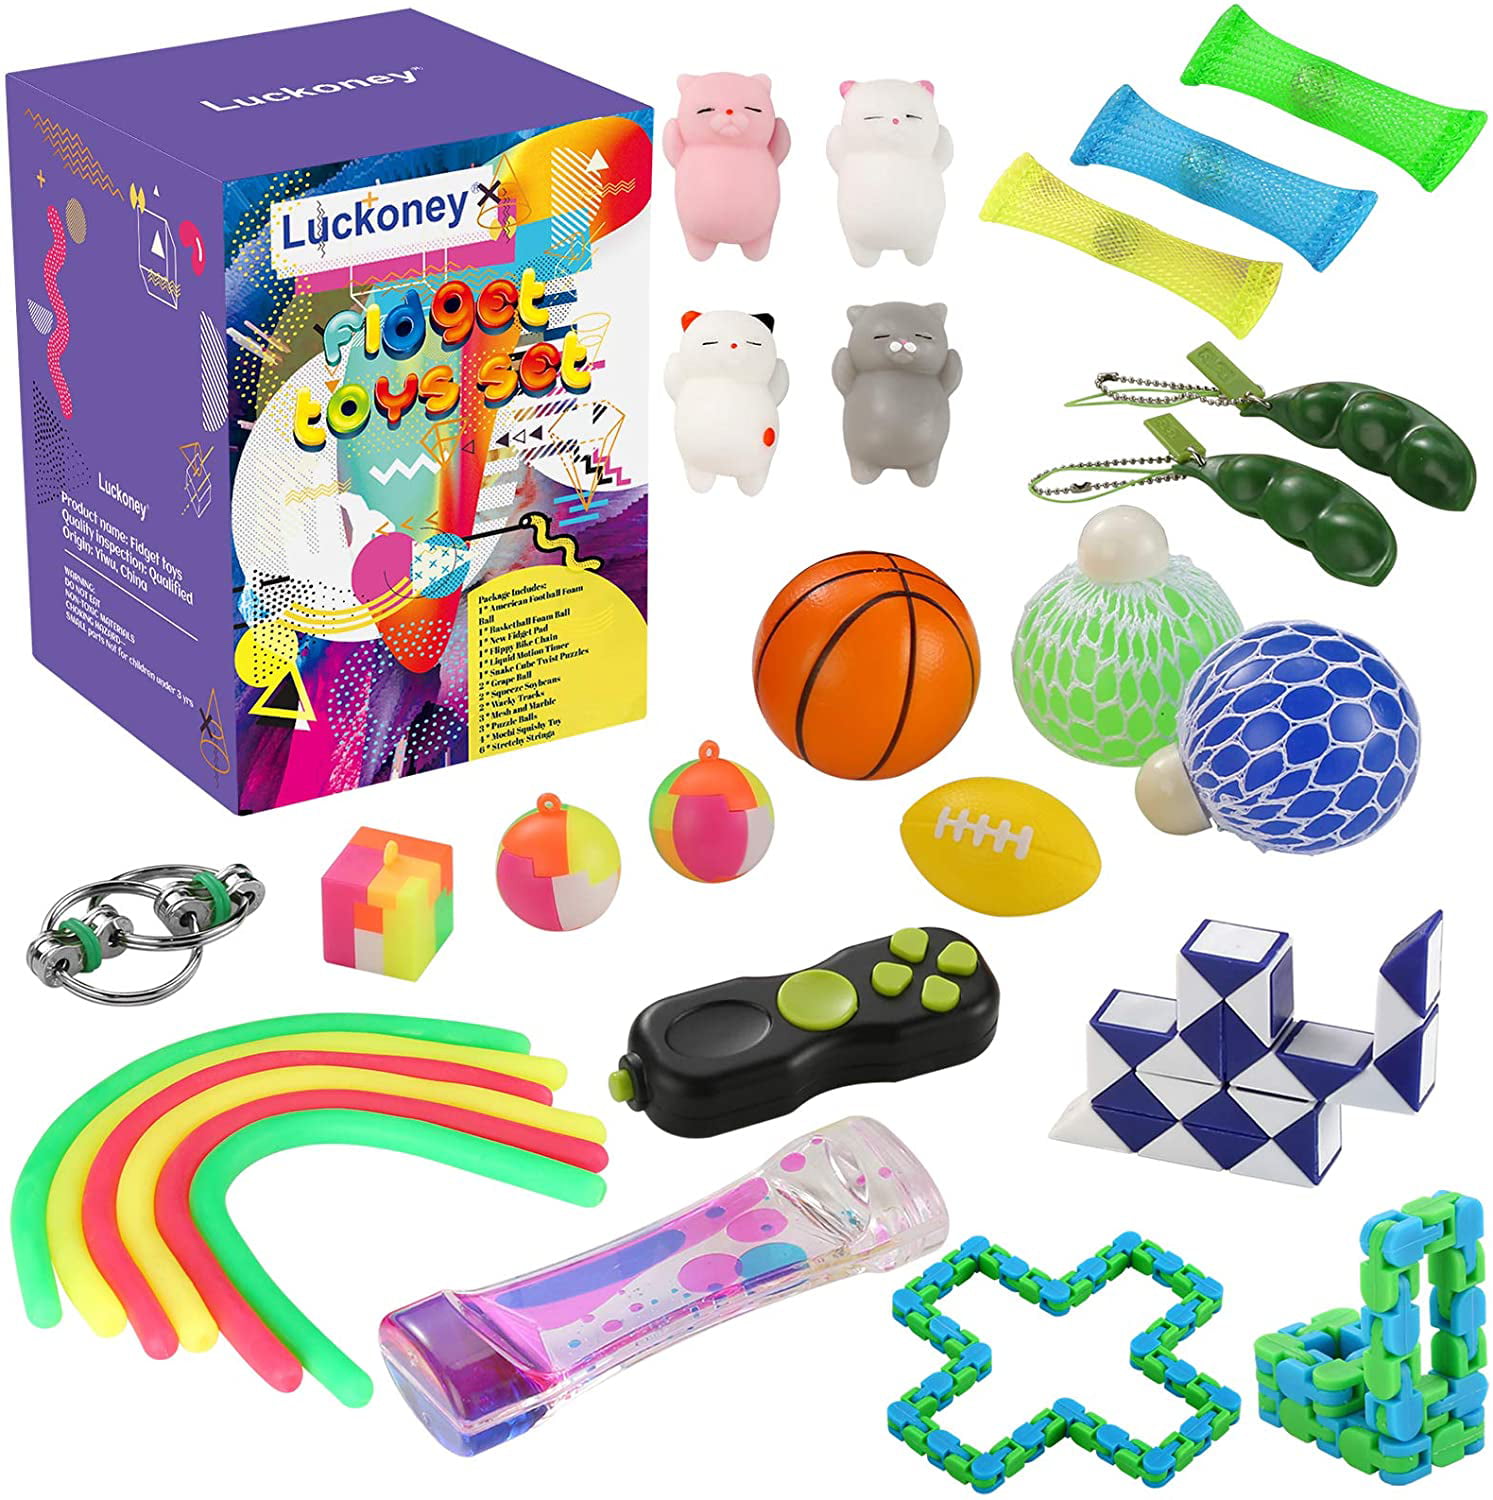 Squishy Peertoys Sensory Fidget Toys Pack For Kids F Sqh 